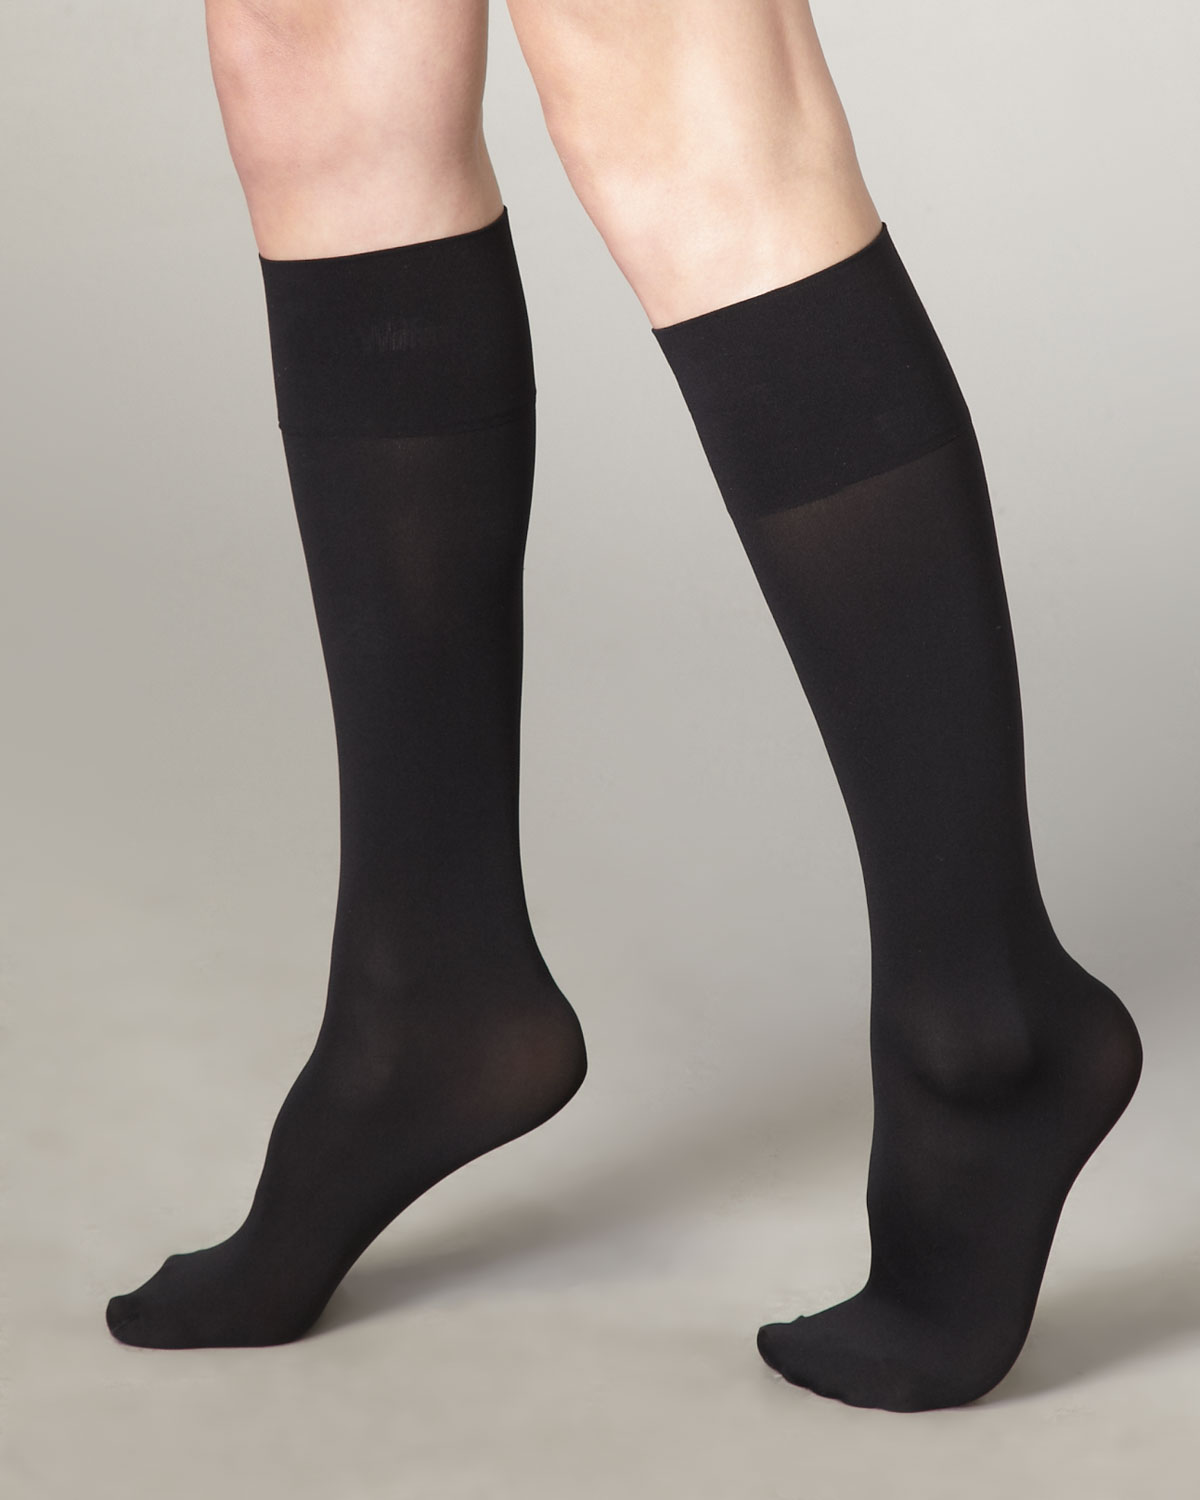 Lyst - Wolford 50 Denier Leg-support Socks in Black